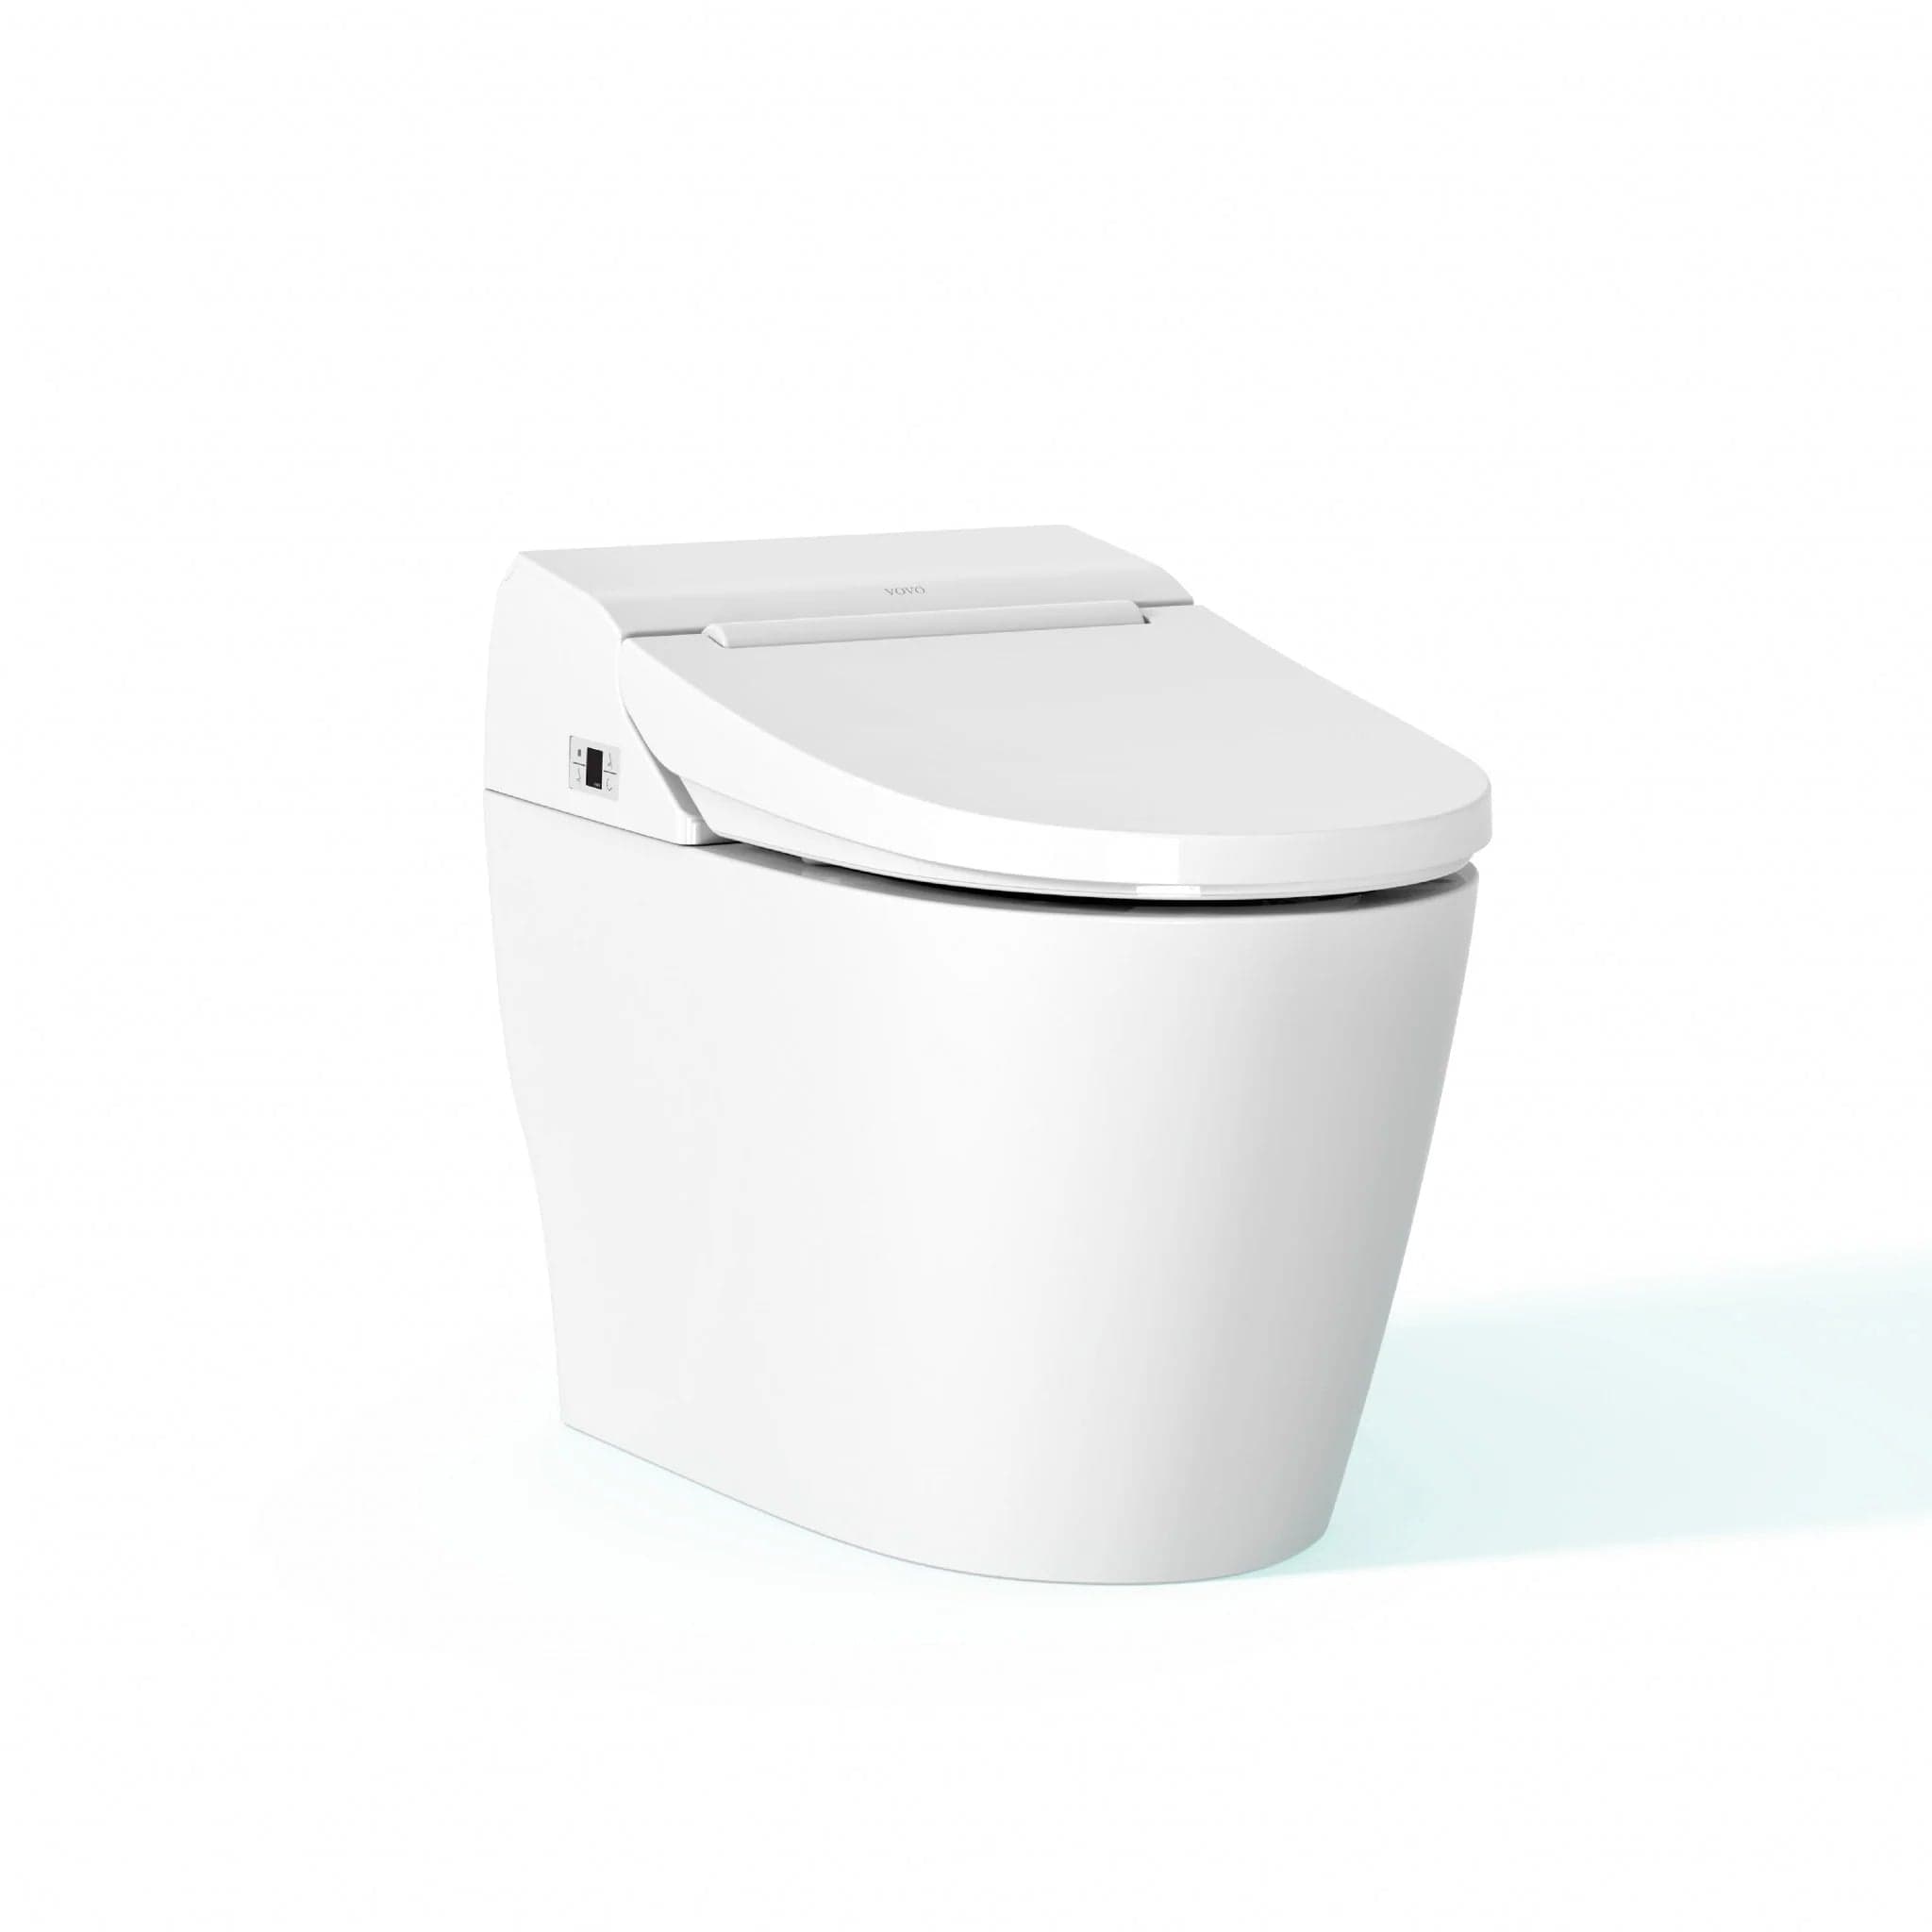 VOVO Integrated Bidet Toilet VOVO Stylement TCB-8100W Integrated Smart Bidet Toilet